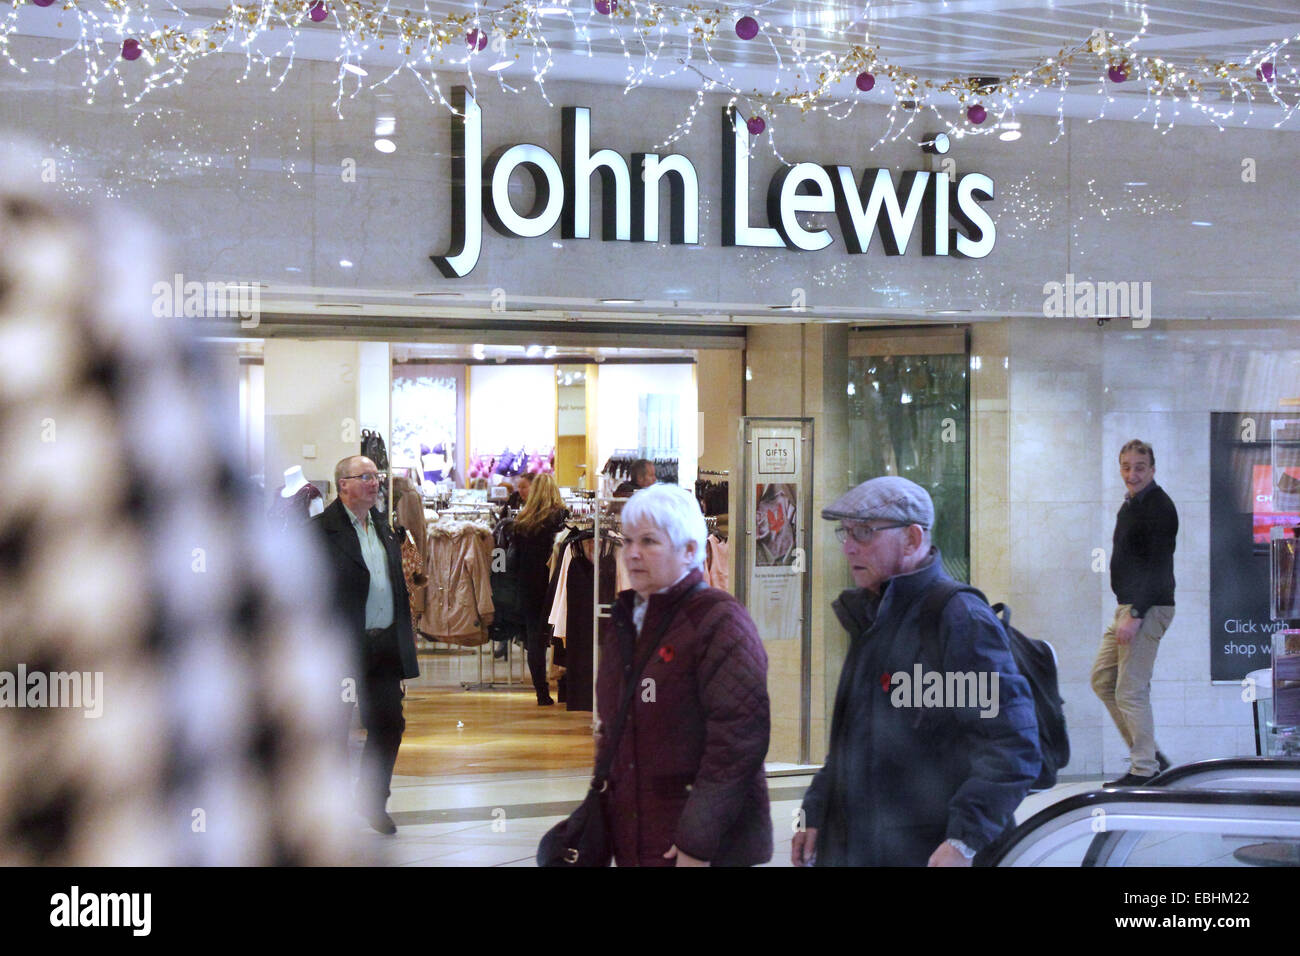 Shoppers outside a John Lewis store in Buchanan Galleries shopping arcade, Glasgow, UK Stock Photo